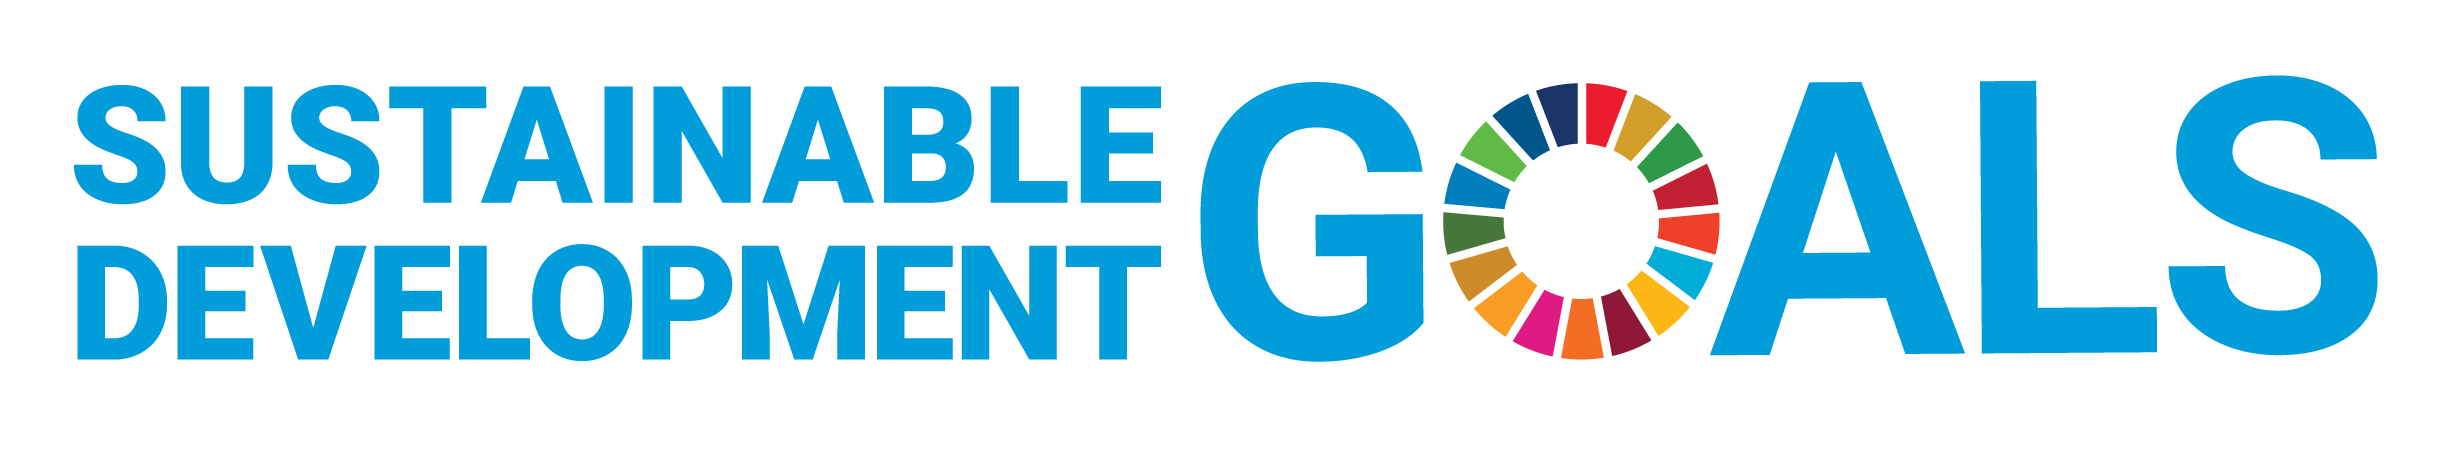 The 17 sustainable development goals logo